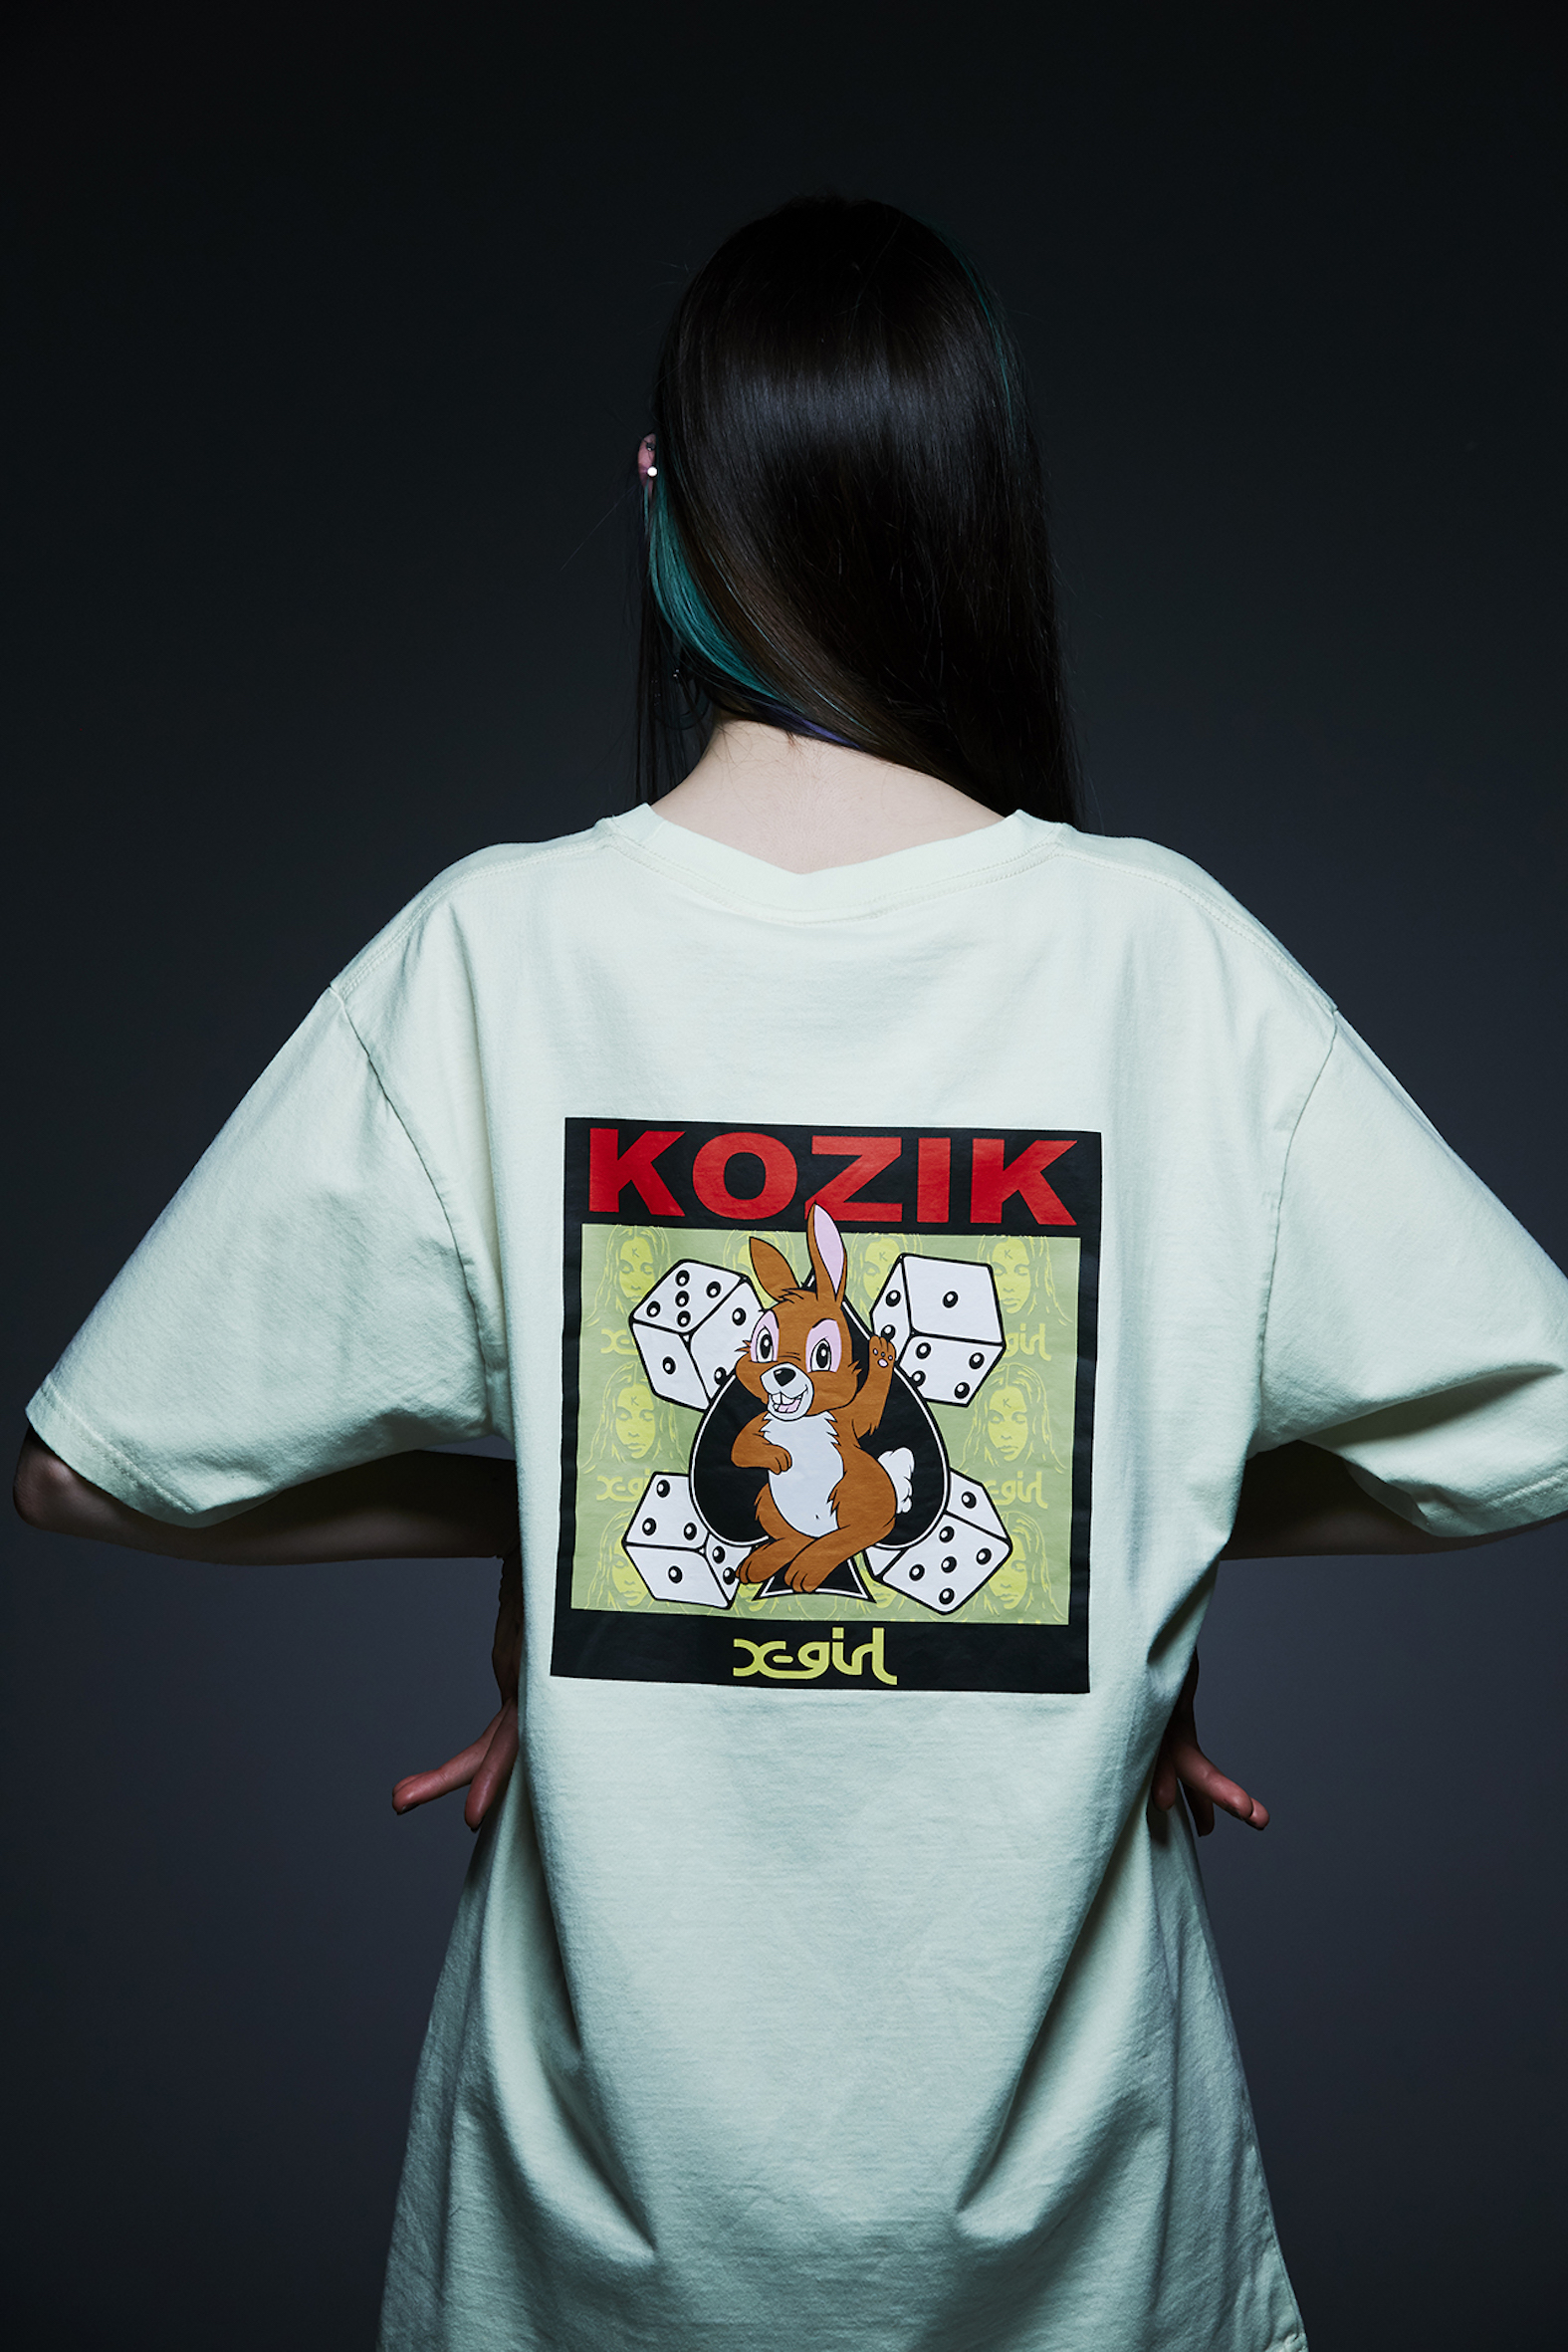 X-girl がグラフィックアーティスト[Frank Kozik]とのコラボレーションをリリース。